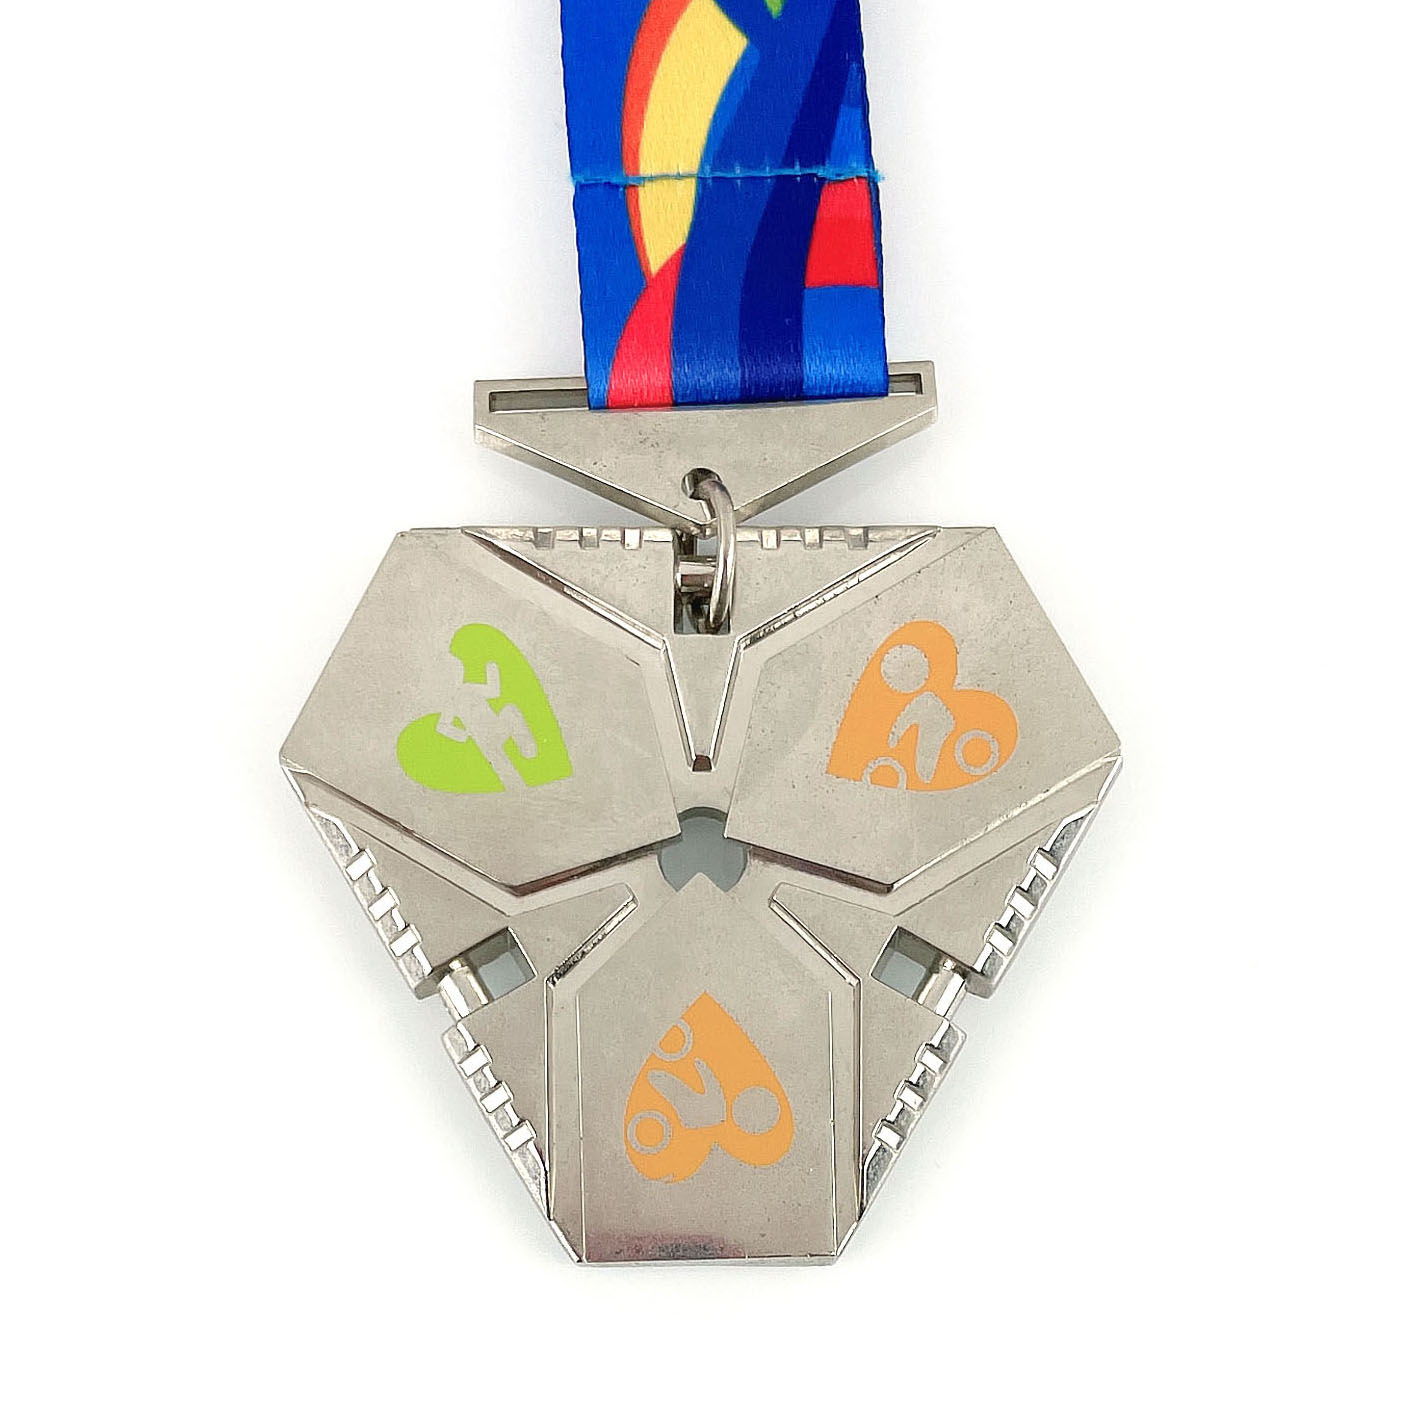 लोगो मुद्रित असलेले चमकदार रौप्य ट्रायथलॉन पदक